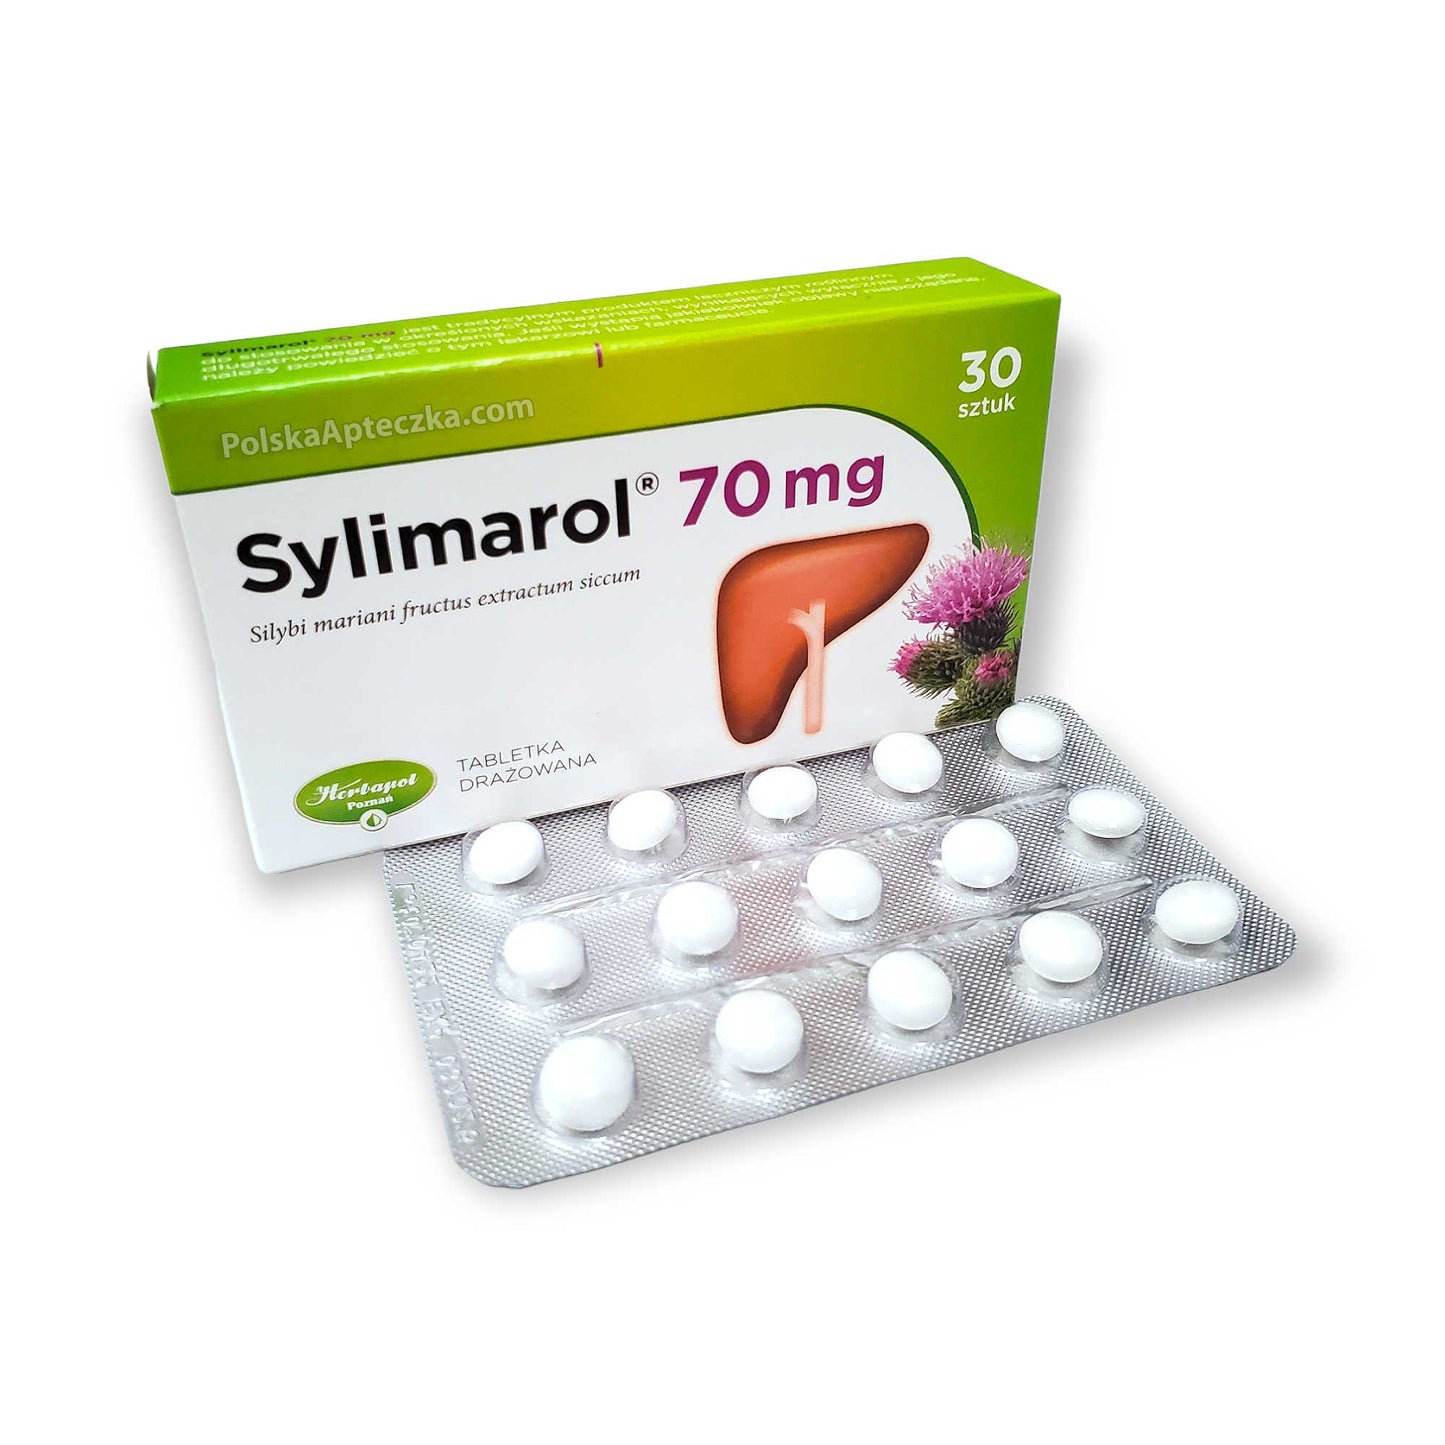 Sylimarol 70mg 30 tablets